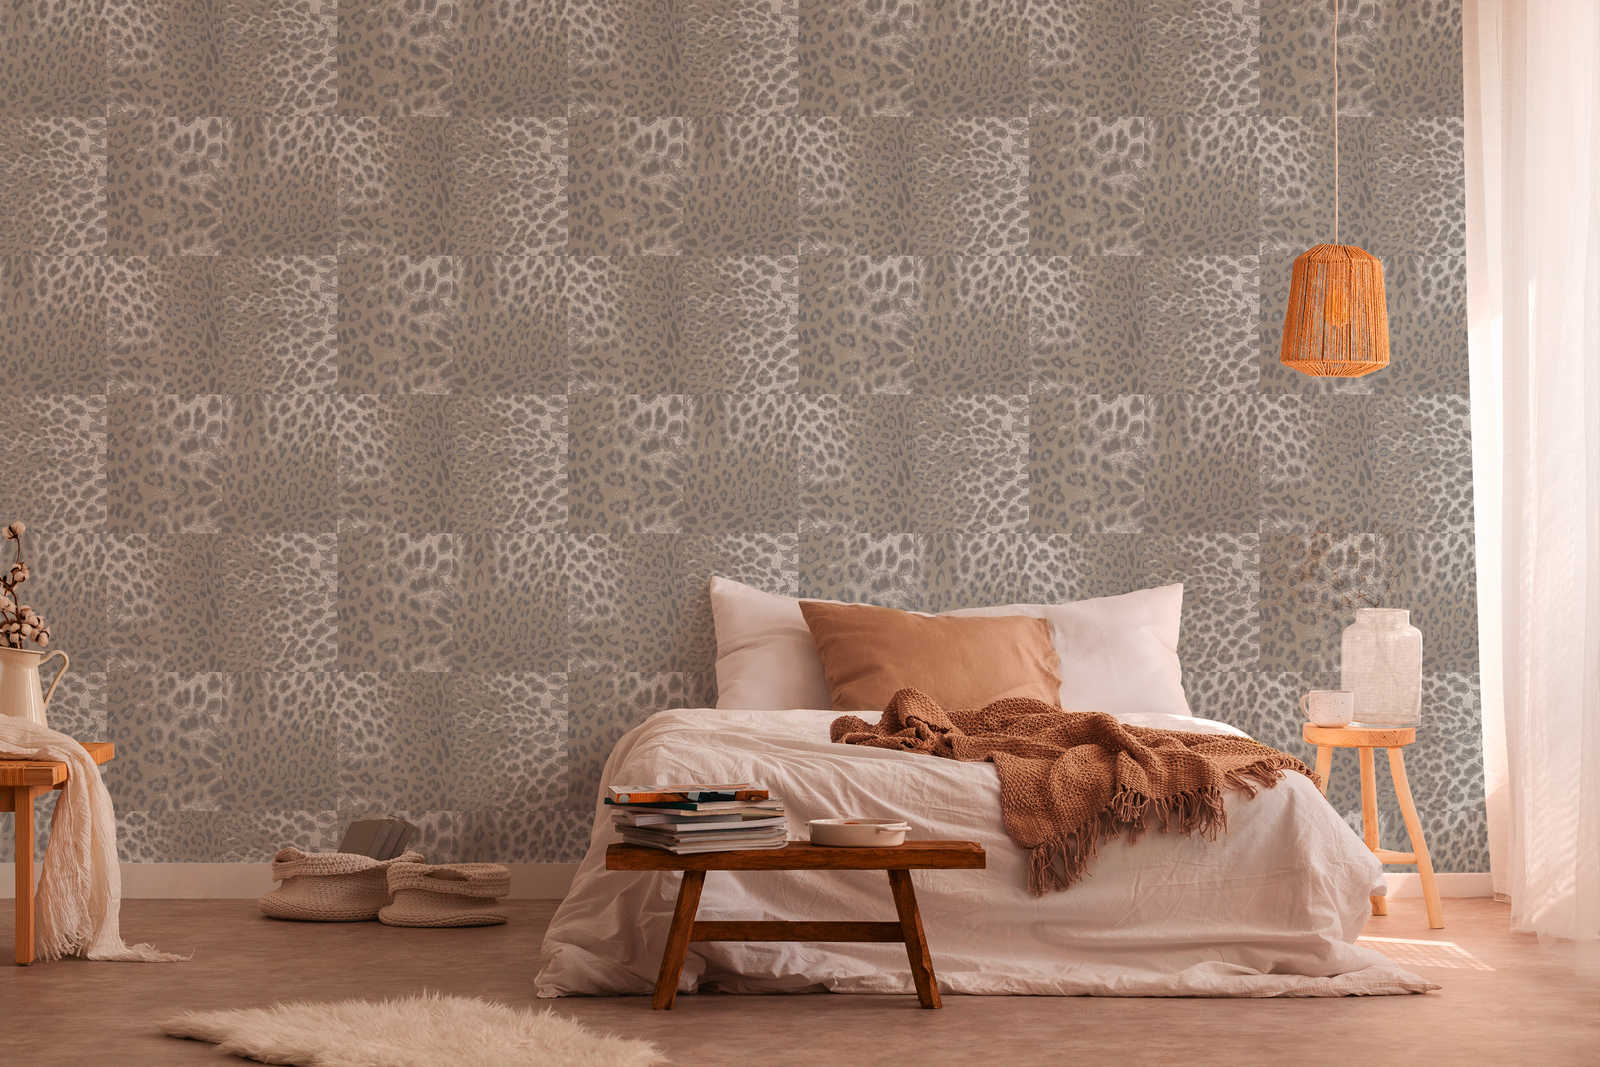             Wallpaper Animal Print Leopard Pattern - Beige, Metallic
        